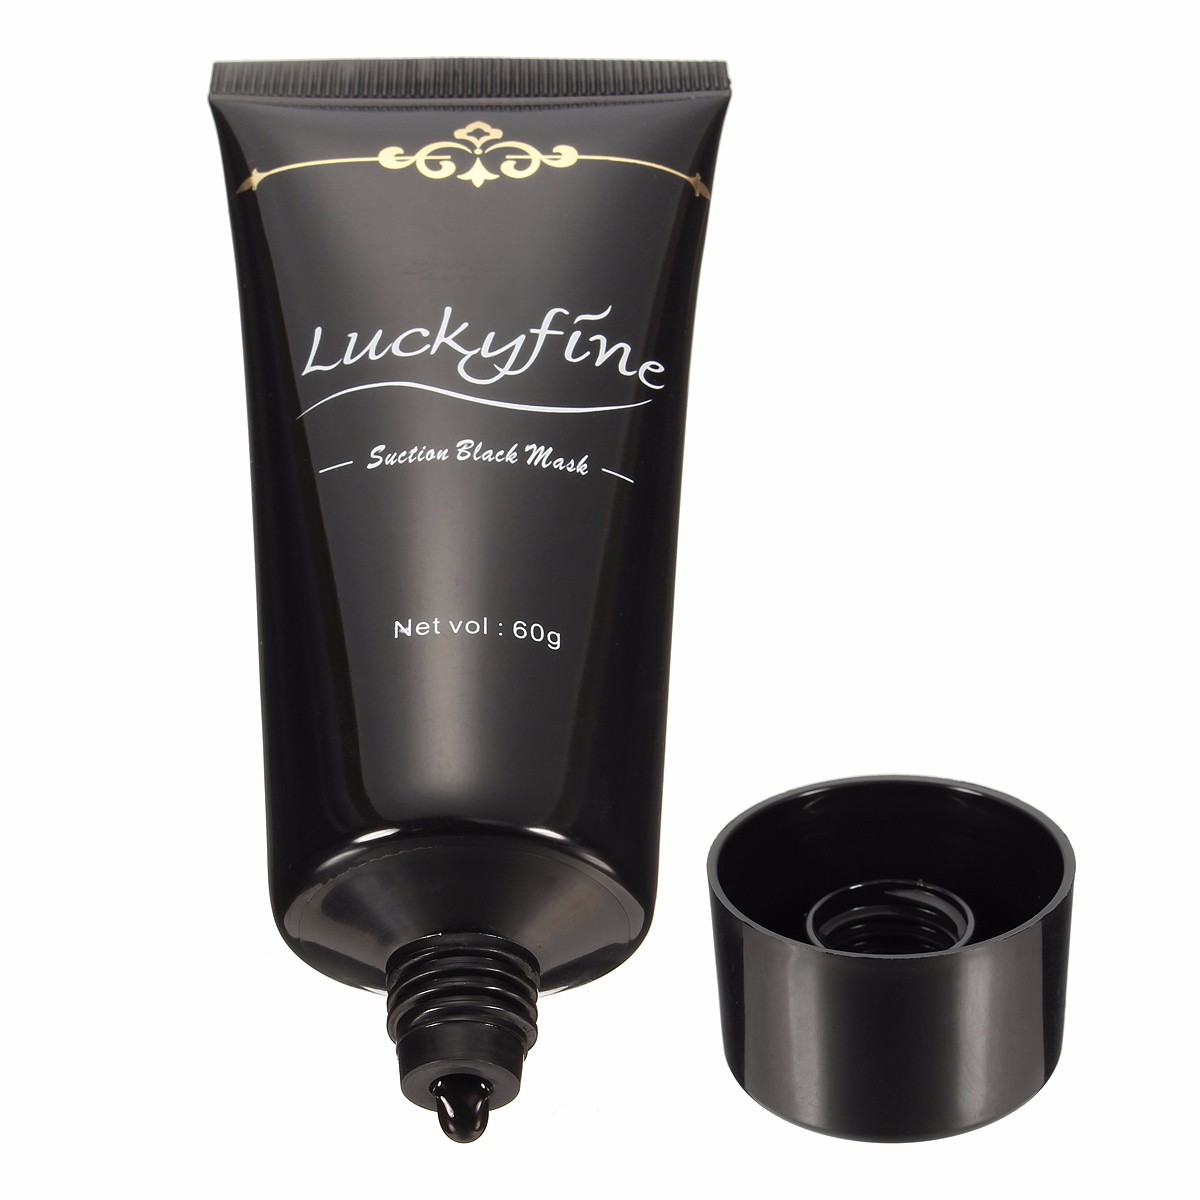 Deep Cleansing Set Luckyfine Peel-Off Blackhead Facial Black Masks & DIY Mud Treatment Flat Brush